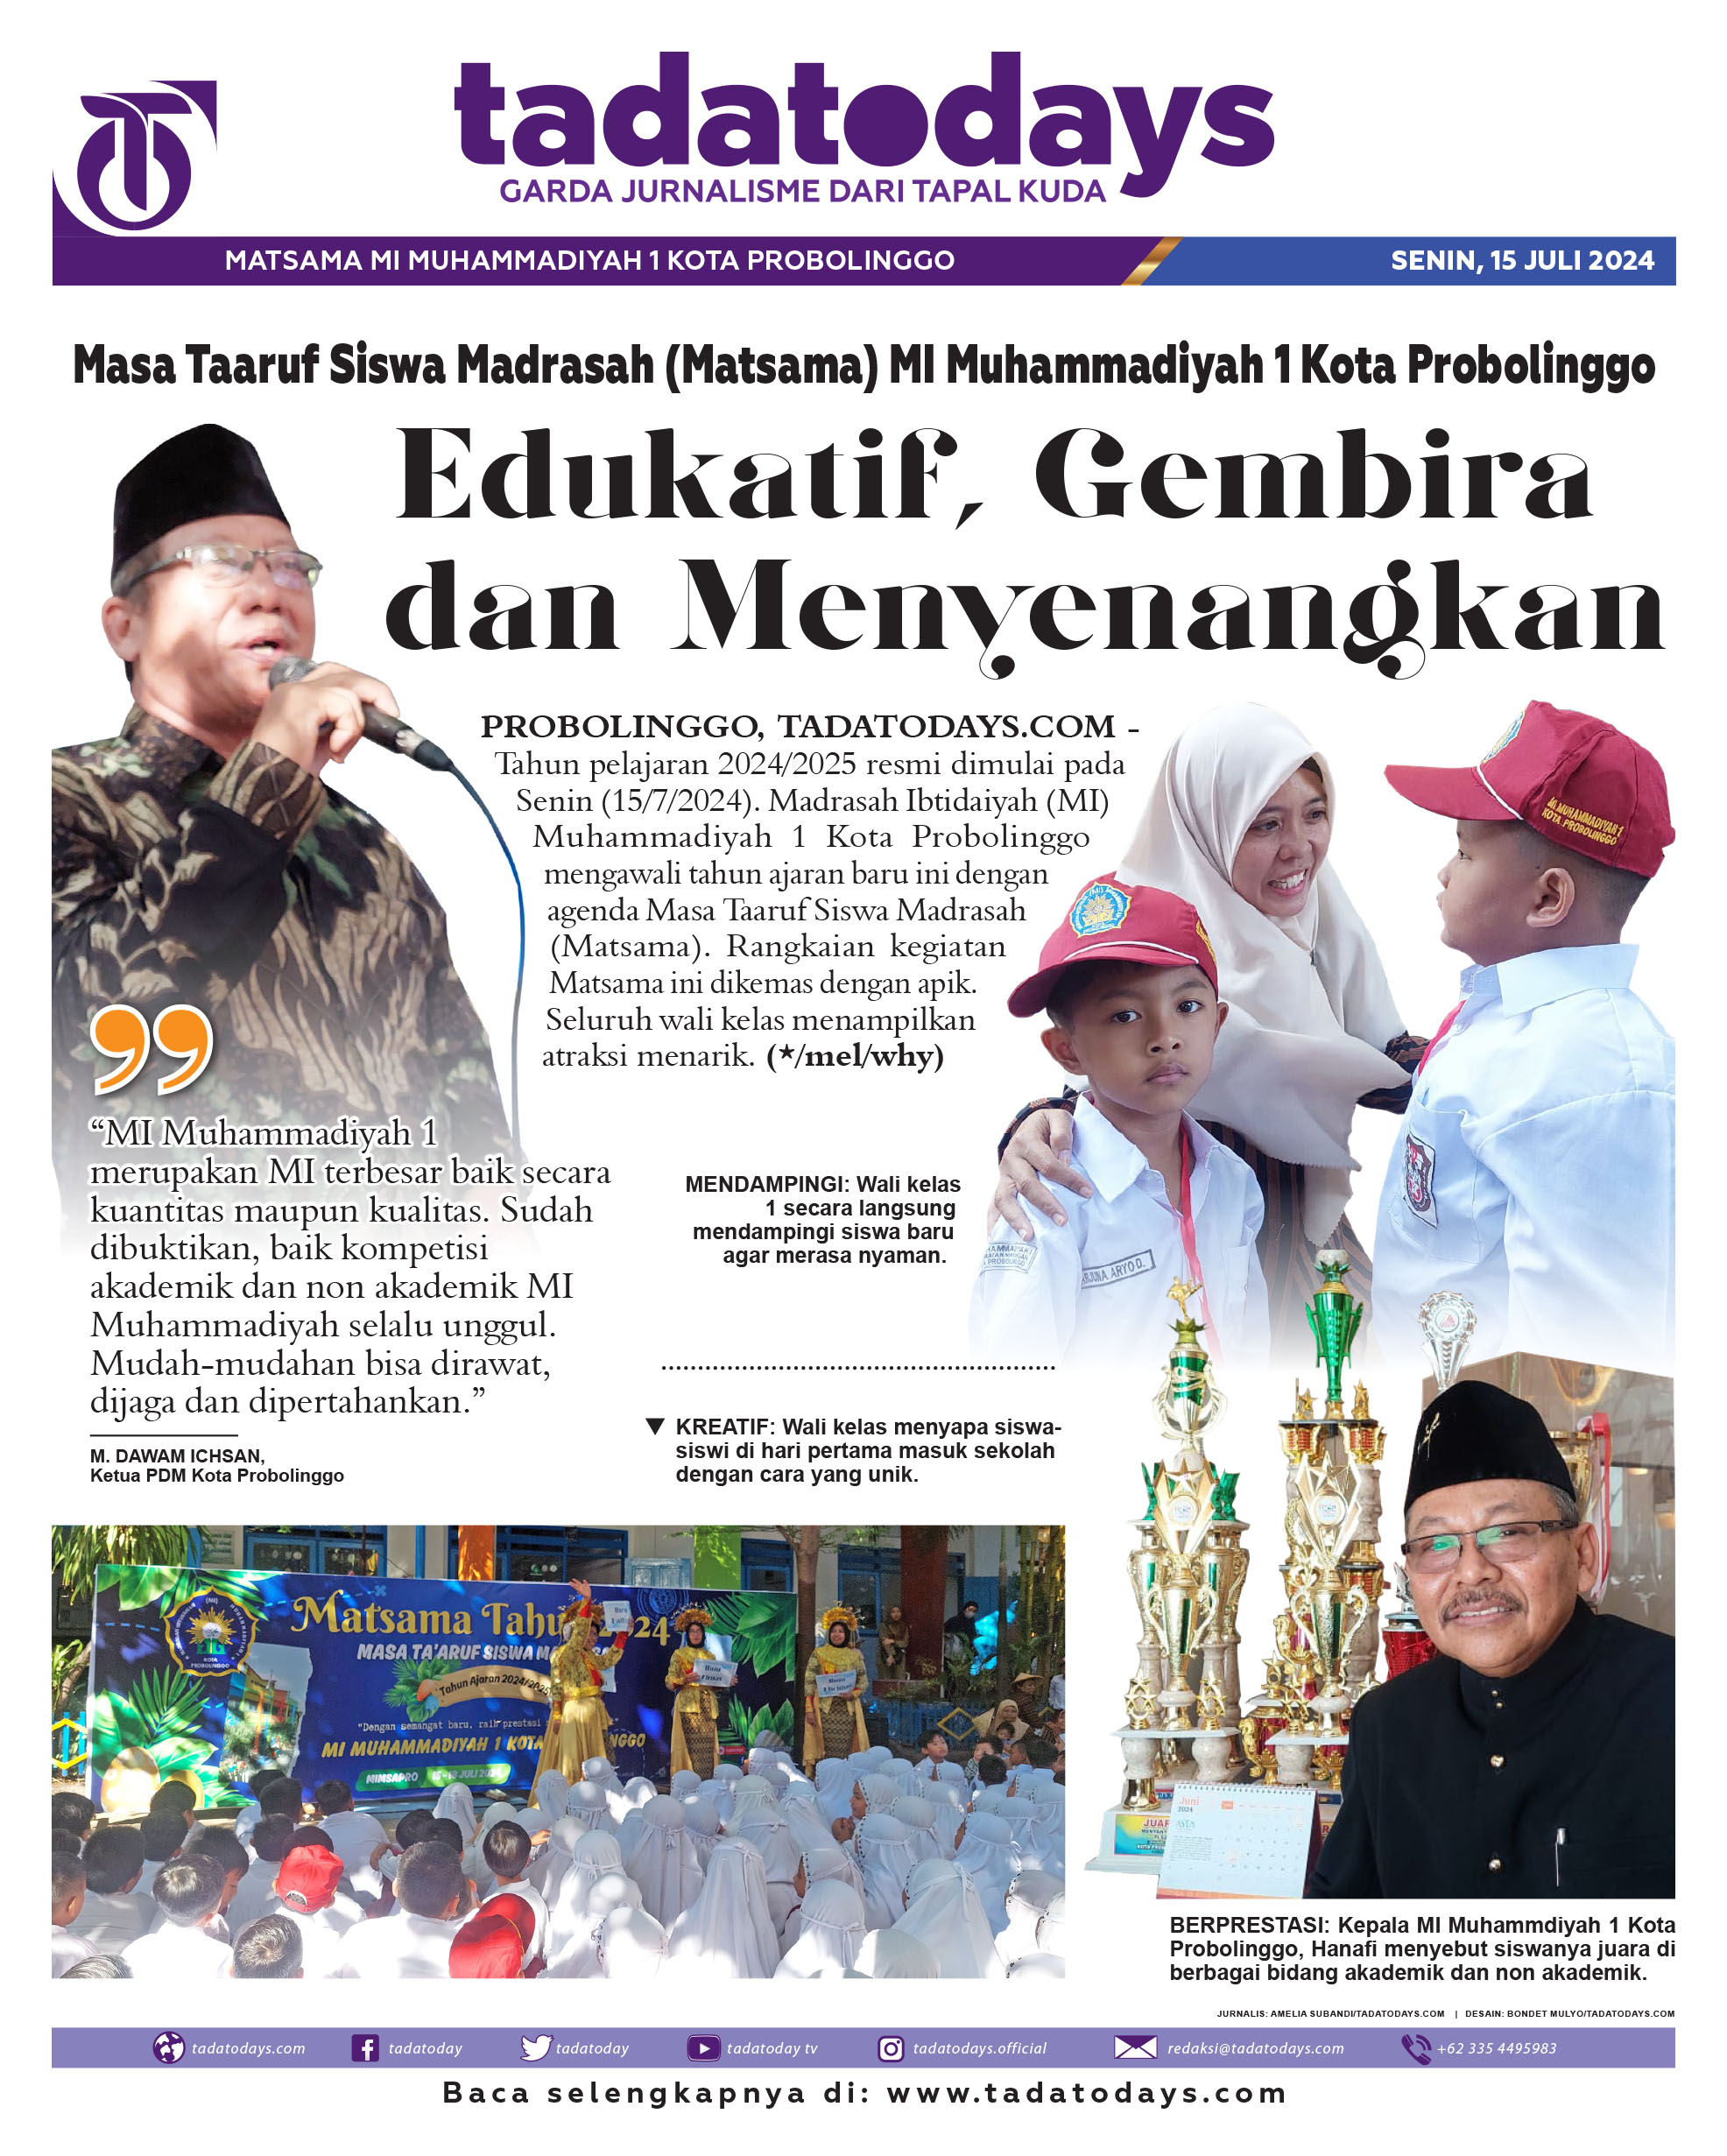 Masa Taaruf Siswa Madrasah (Matsama) di MI Muhammadiyah 1 Kota Probolinggo